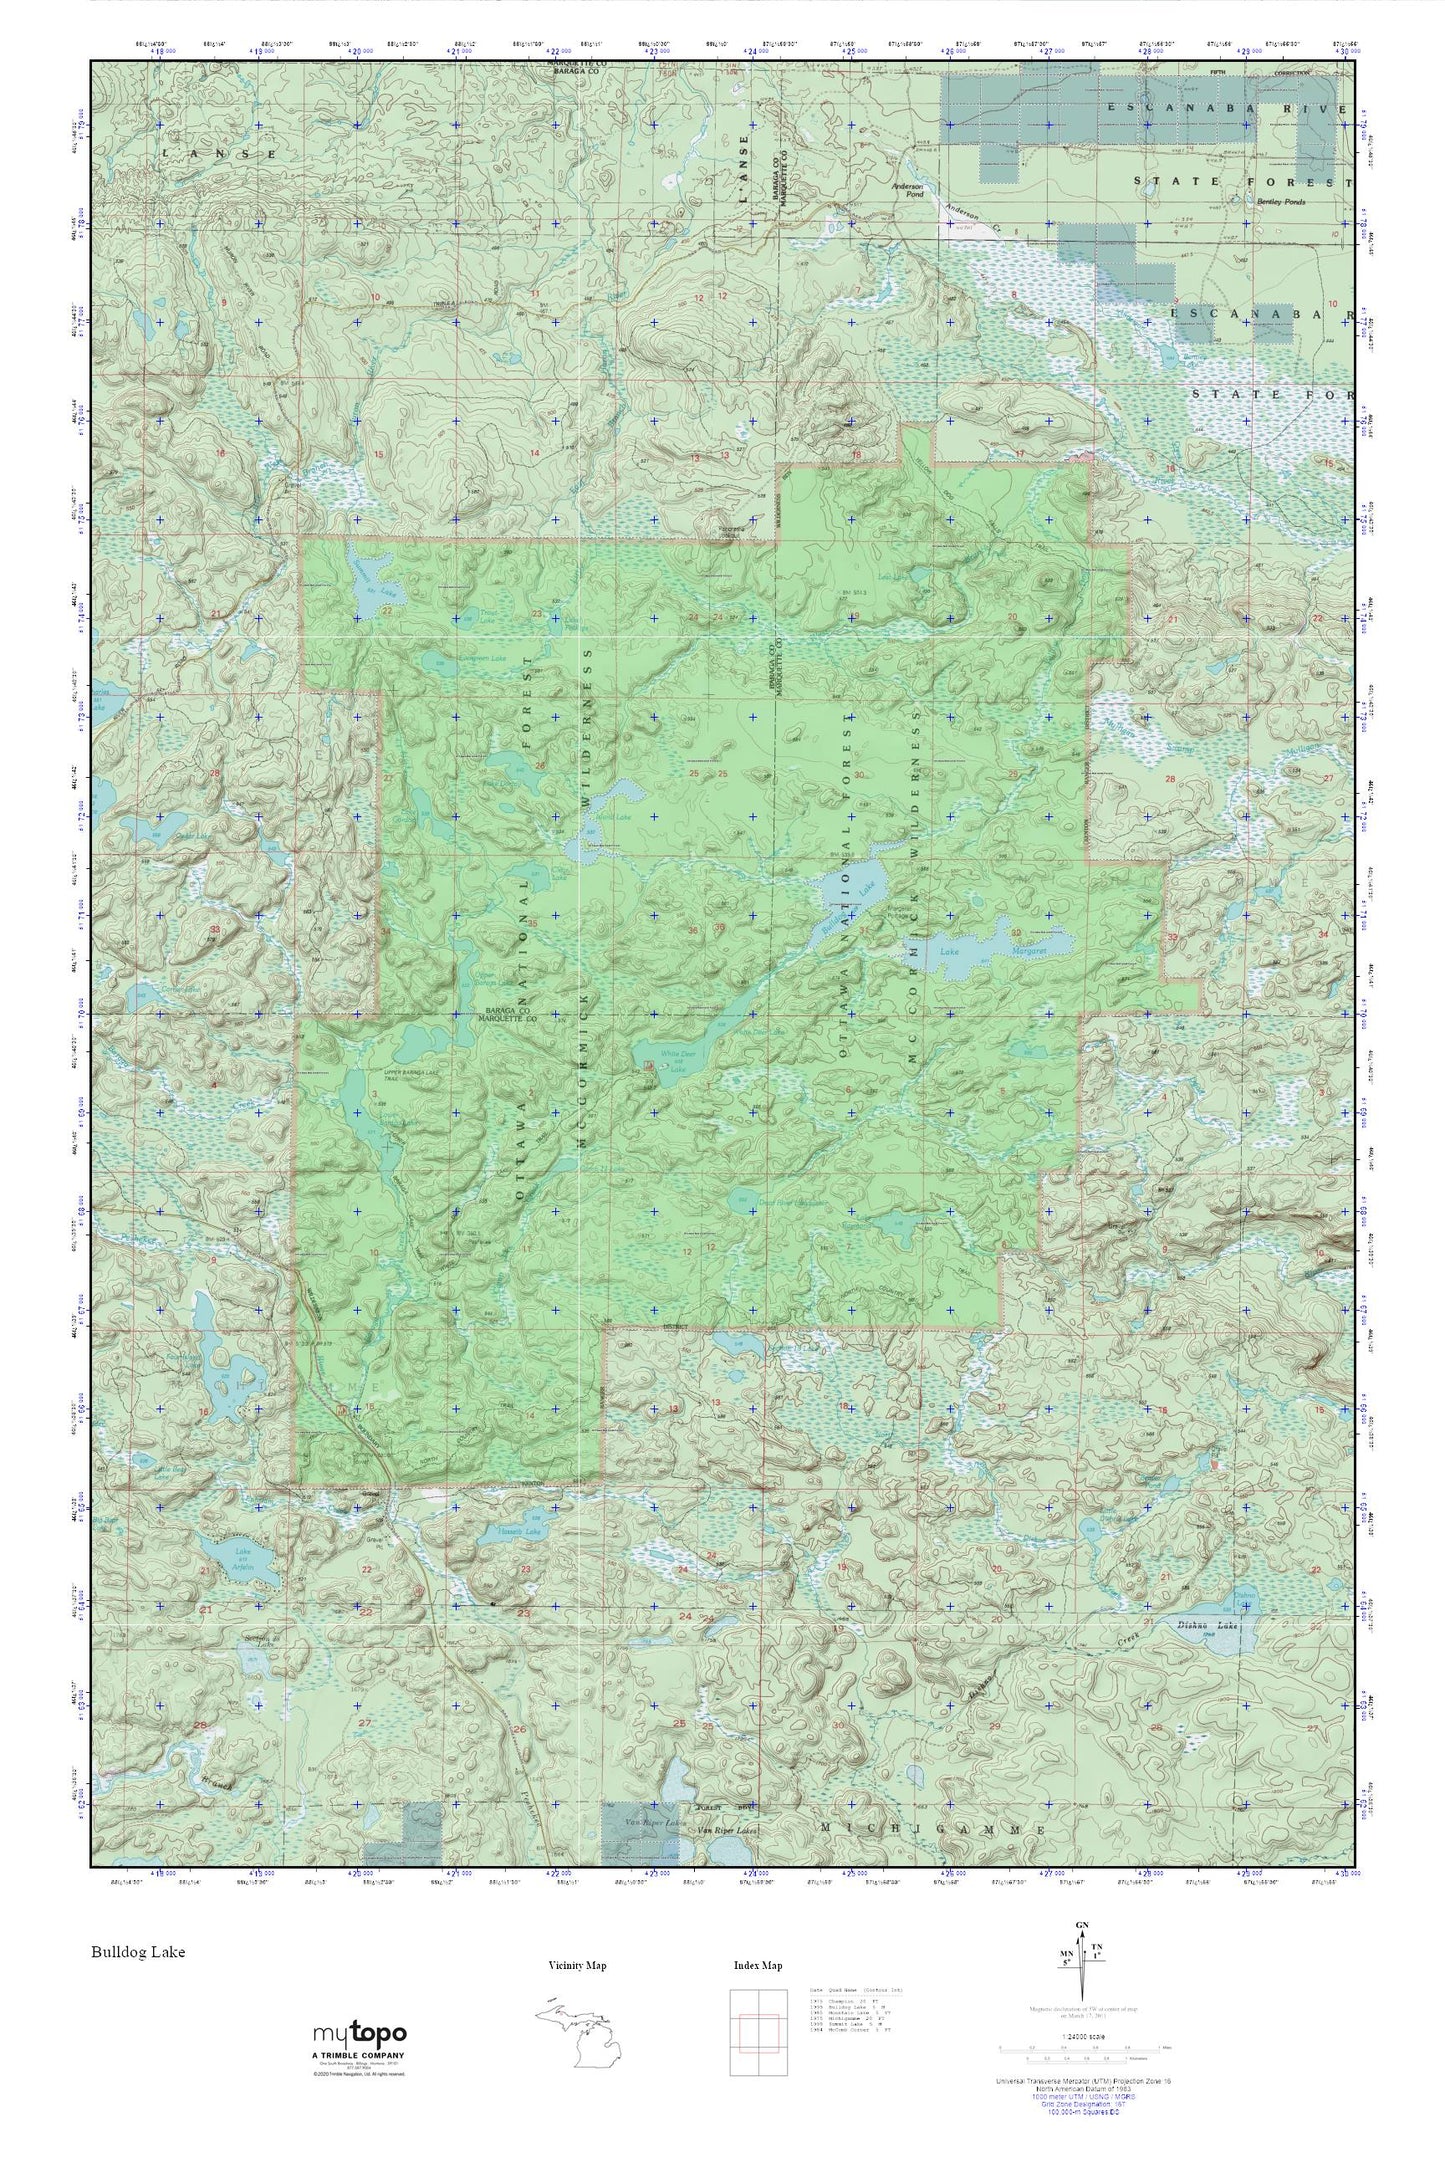 McCormick Wilderness MyTopo Explorer Series Map Image